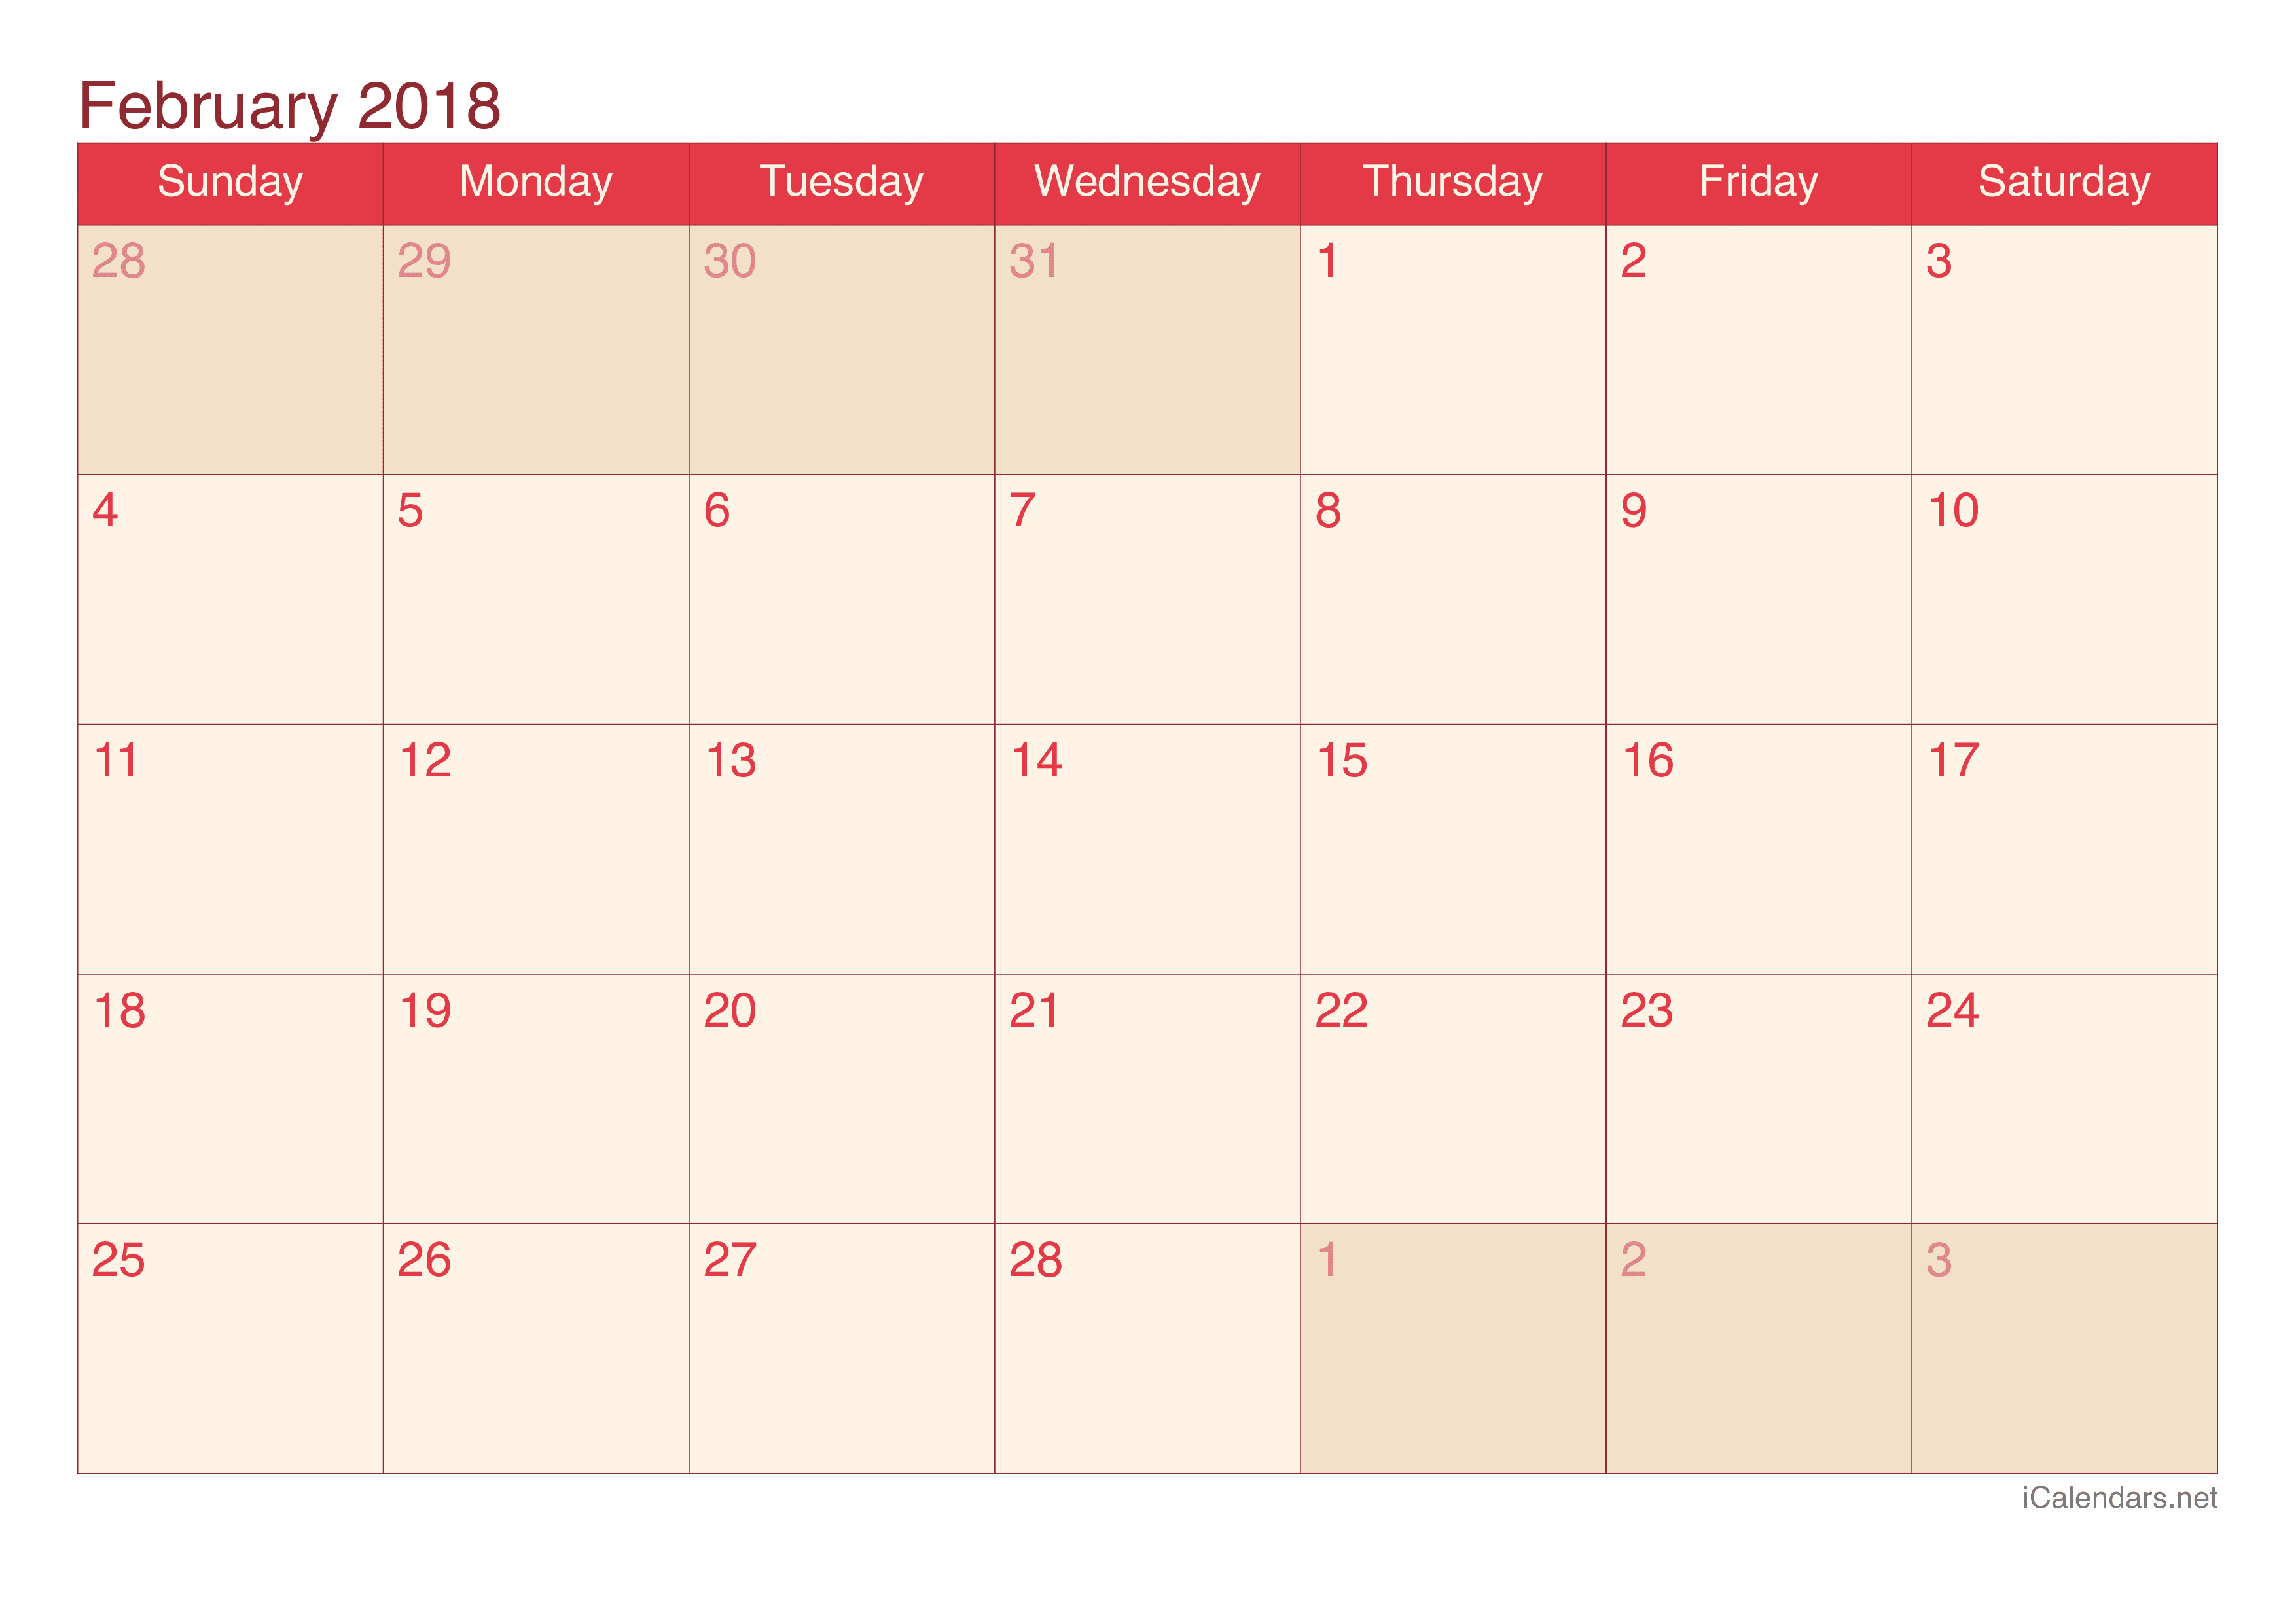 February 2018 Printable Calendar February 2018 Calendar Mg WrPsTU